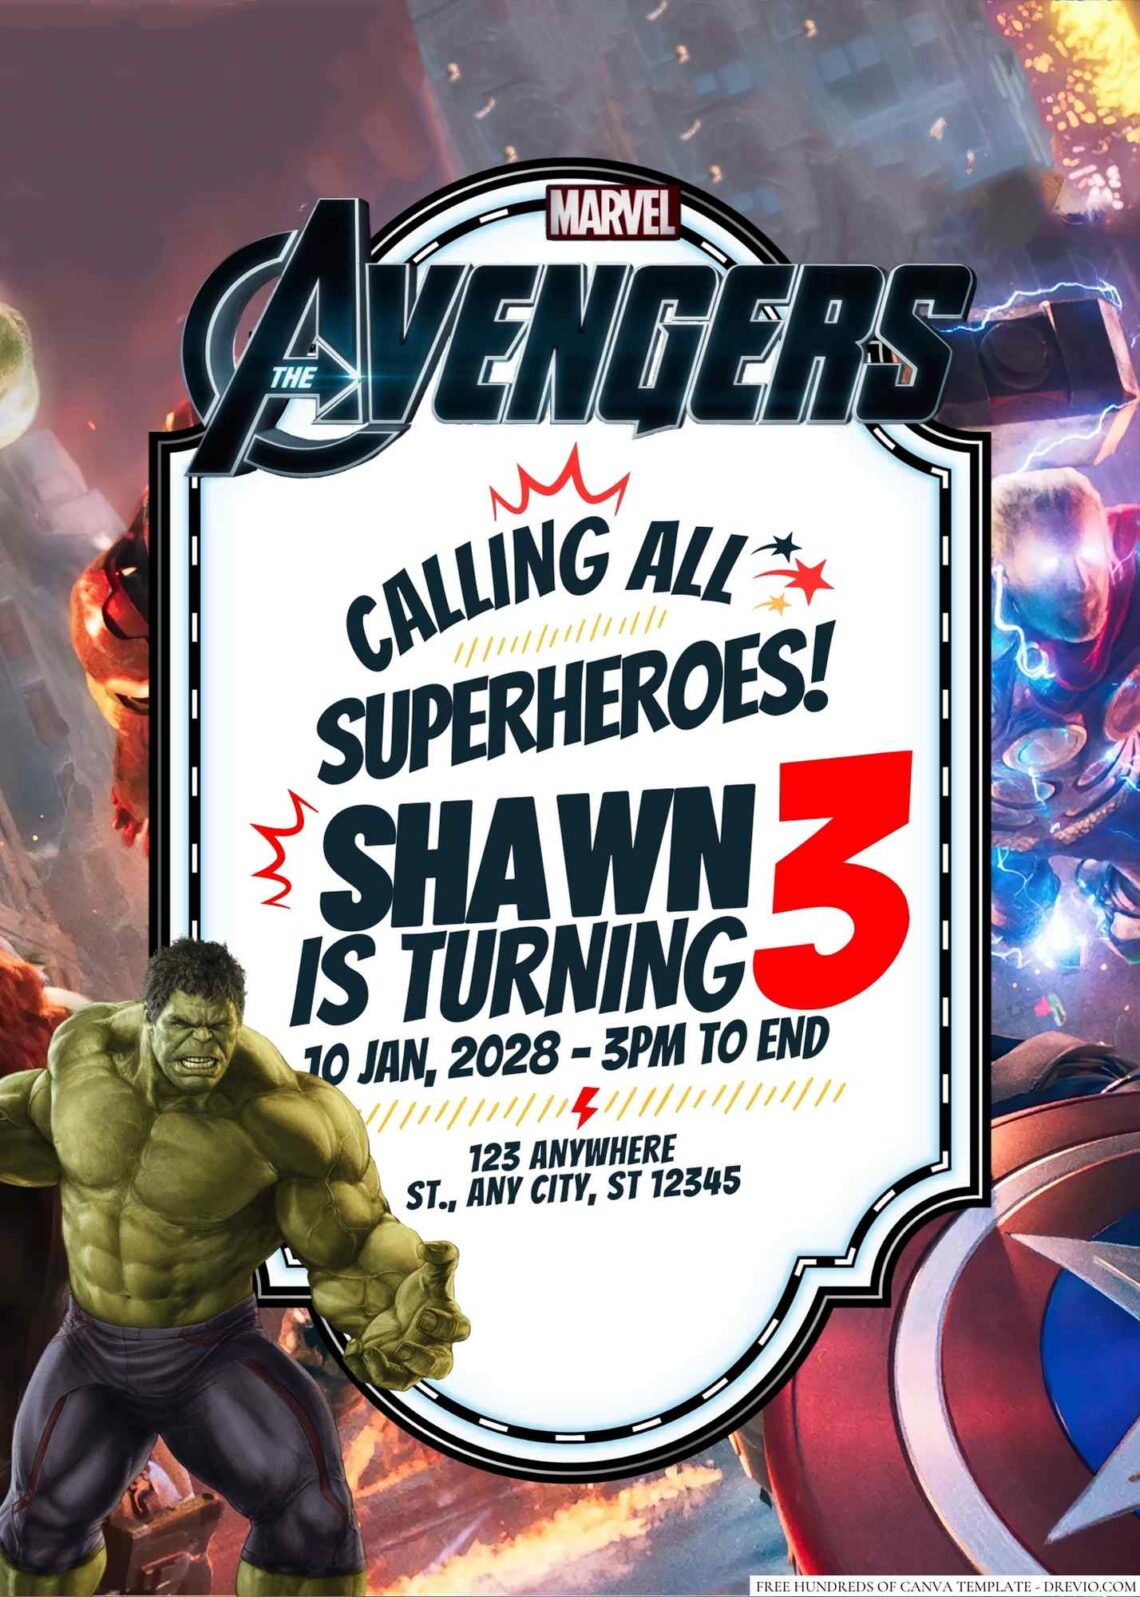 Free Editable The Avengers Birthday Invitation